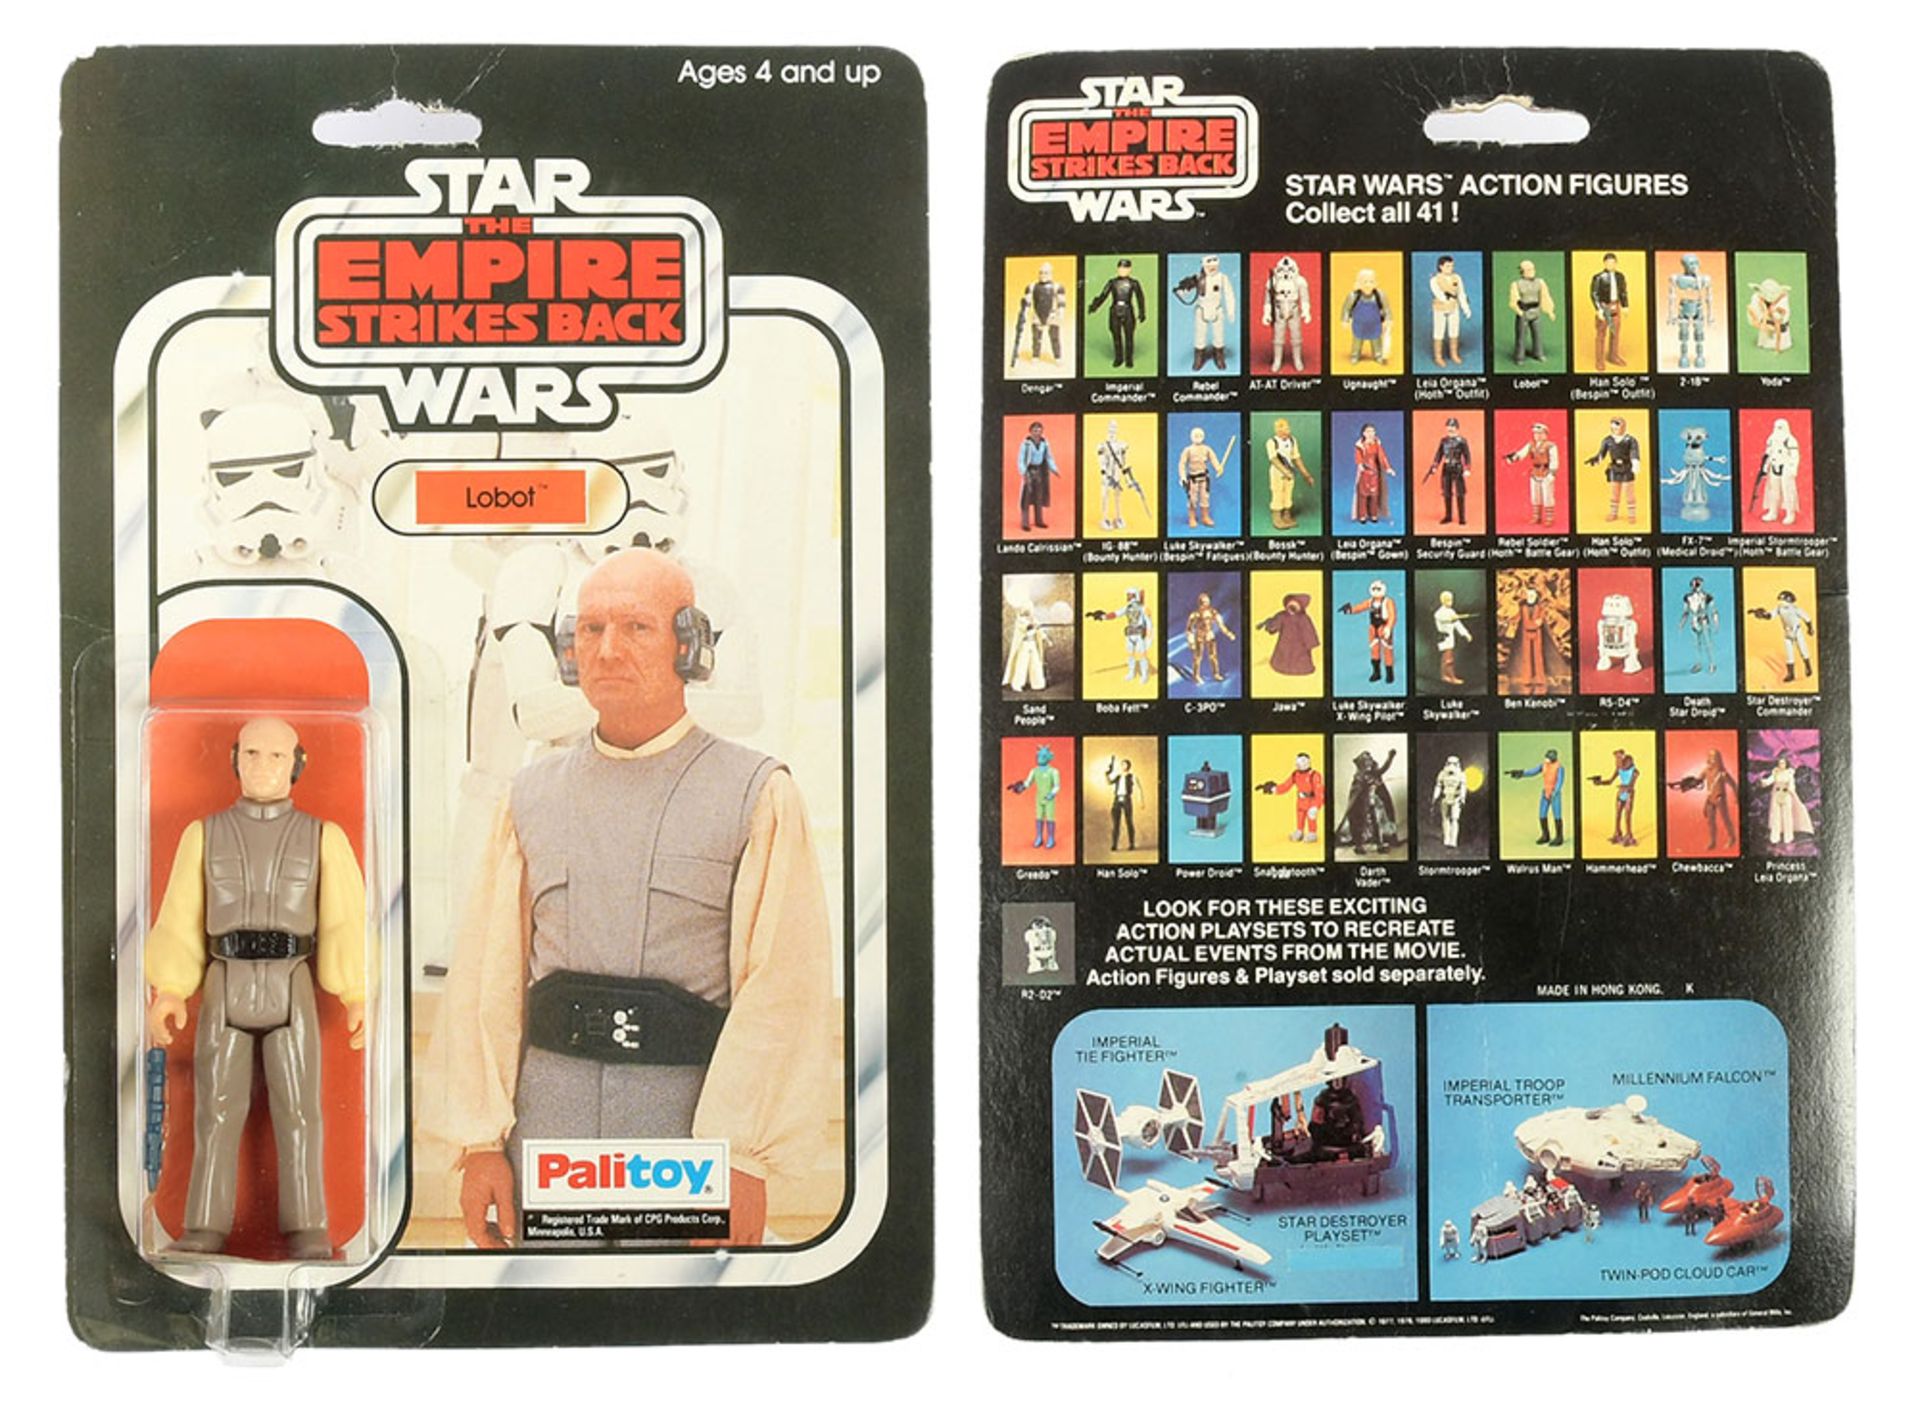 Palitoy Star Wars vintage The Empire Strikes